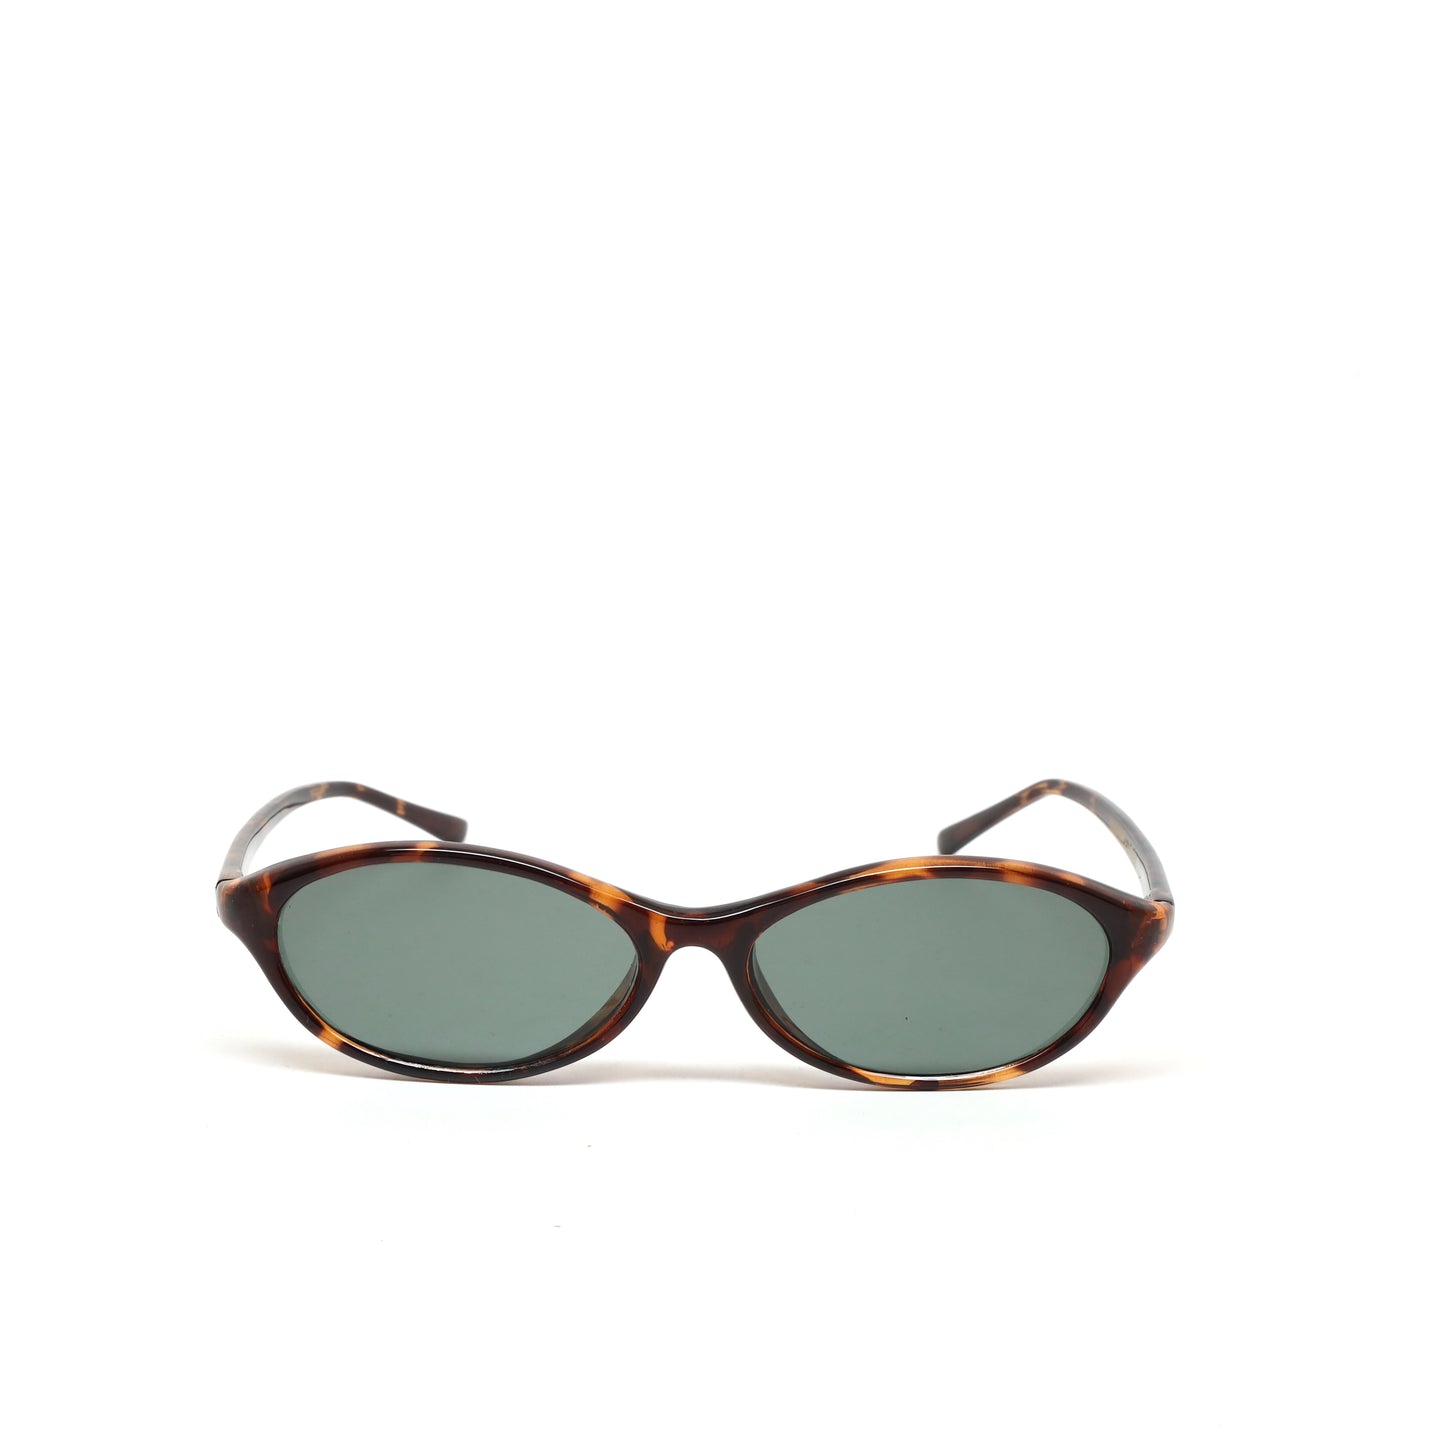 Vintage Small Size 90s/Y2k Bella Oval Frame Sunglasses - Tortoise